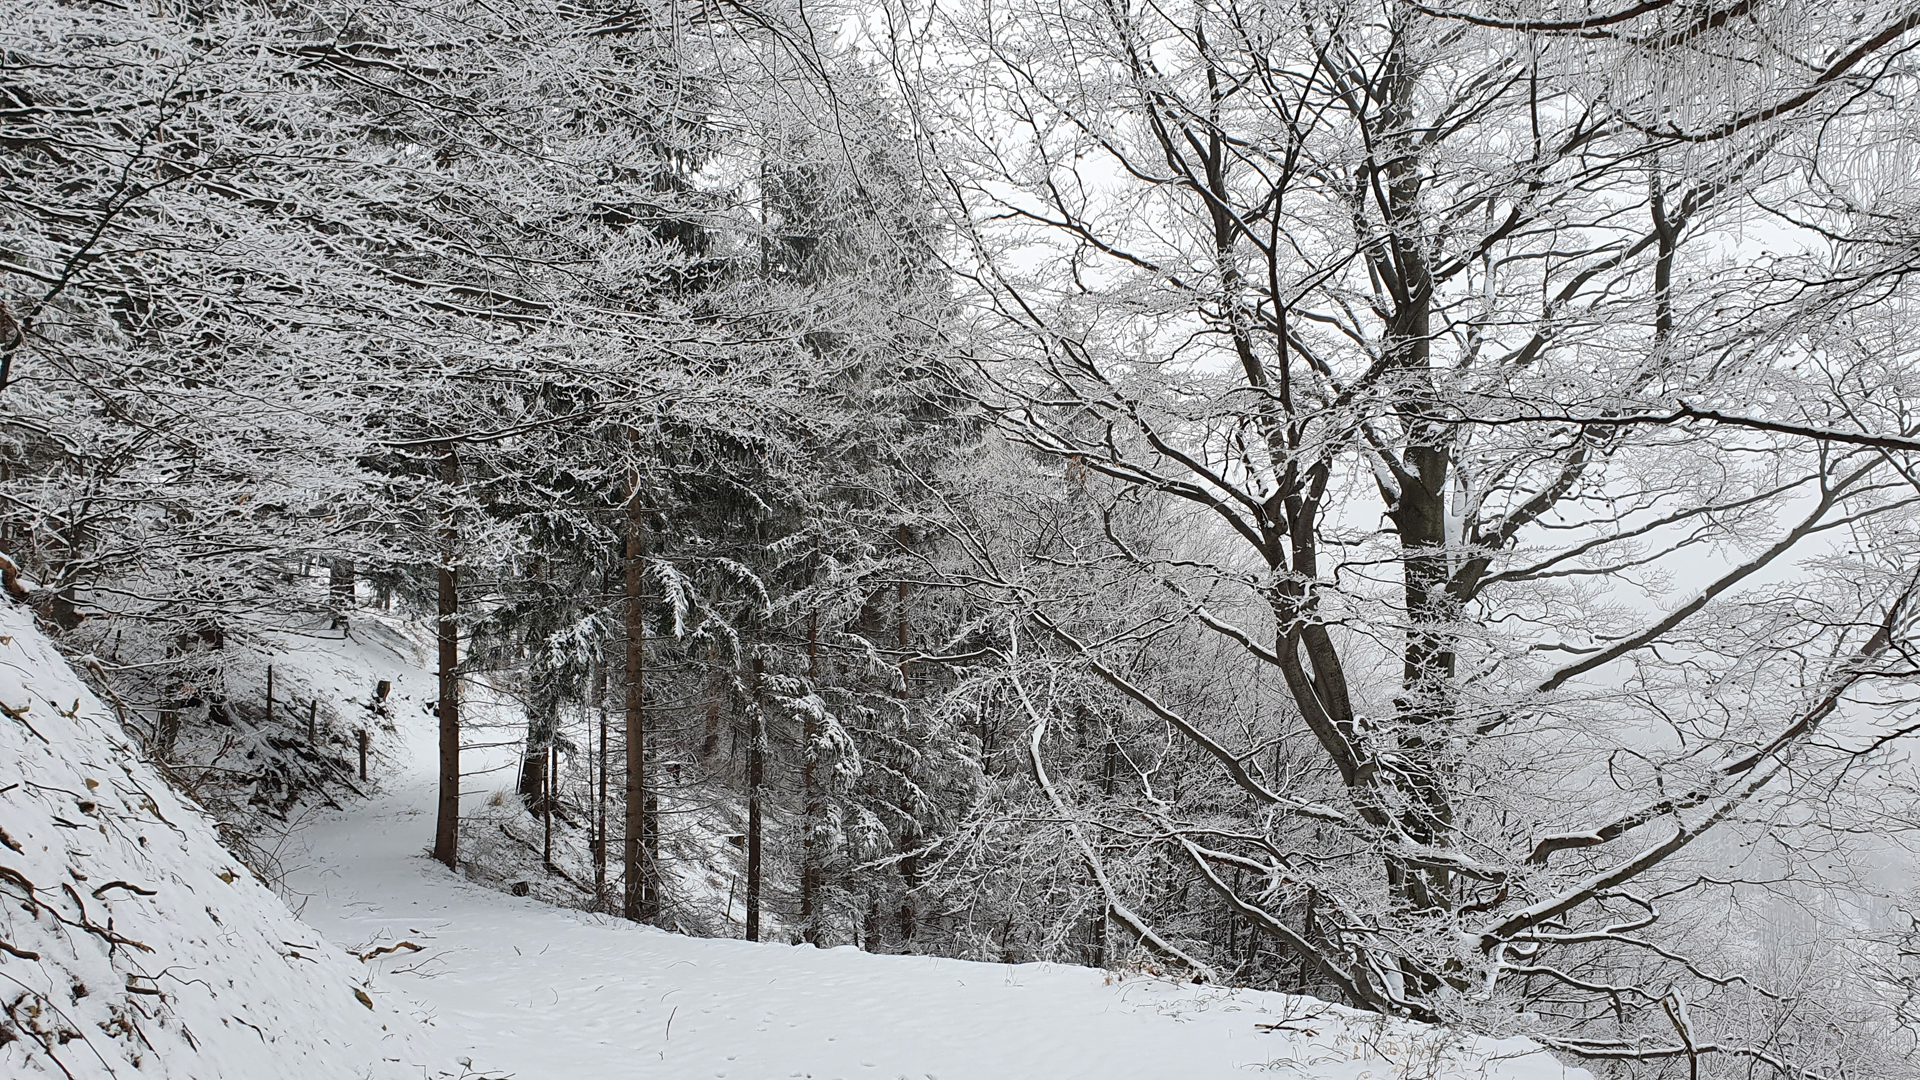 Fotostrecke Winter Abbildung 42: Winter-Wunderland am Geissenberg in Schwarzenbach an der Pielach